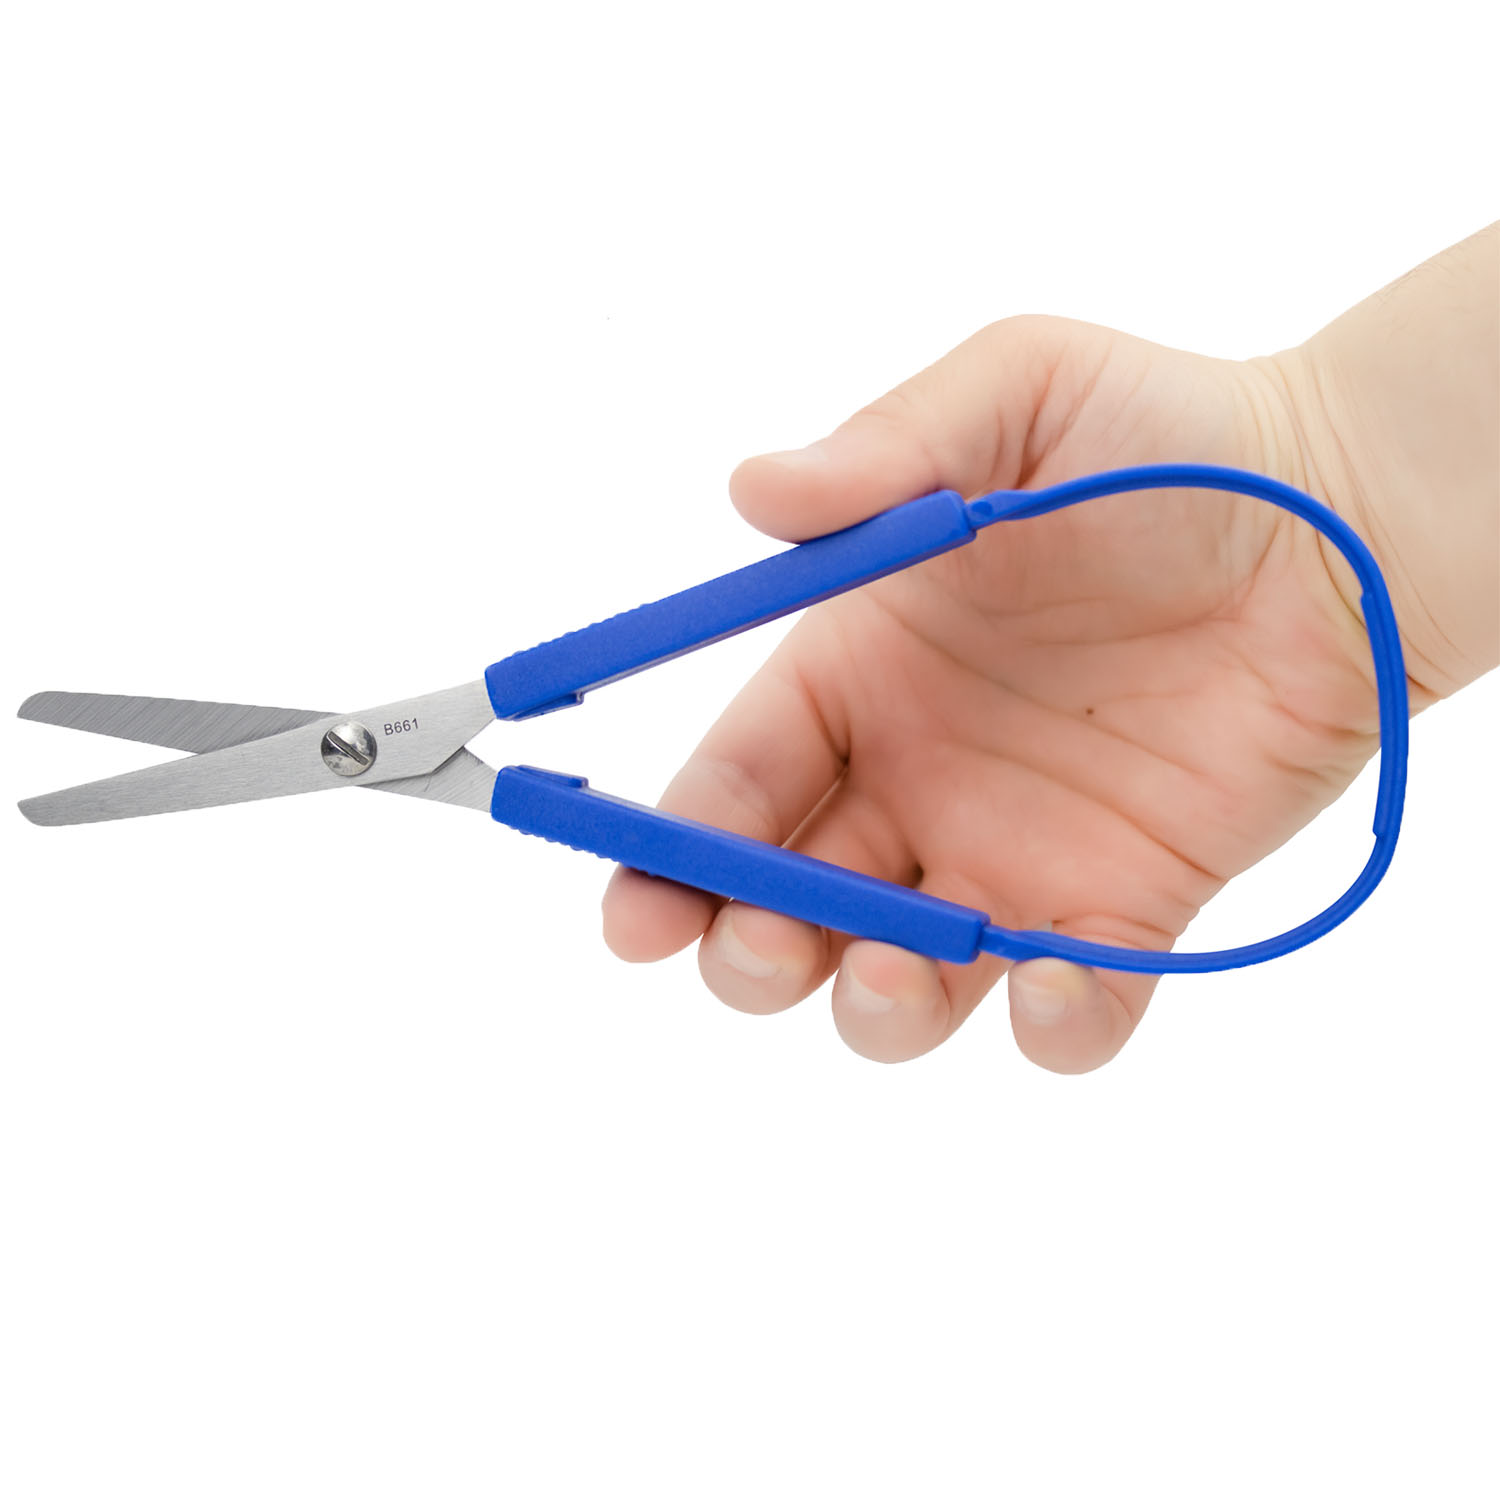 Buy Westcott® Handi-Squeeze Adaptive Scissors at S&S Worldwide